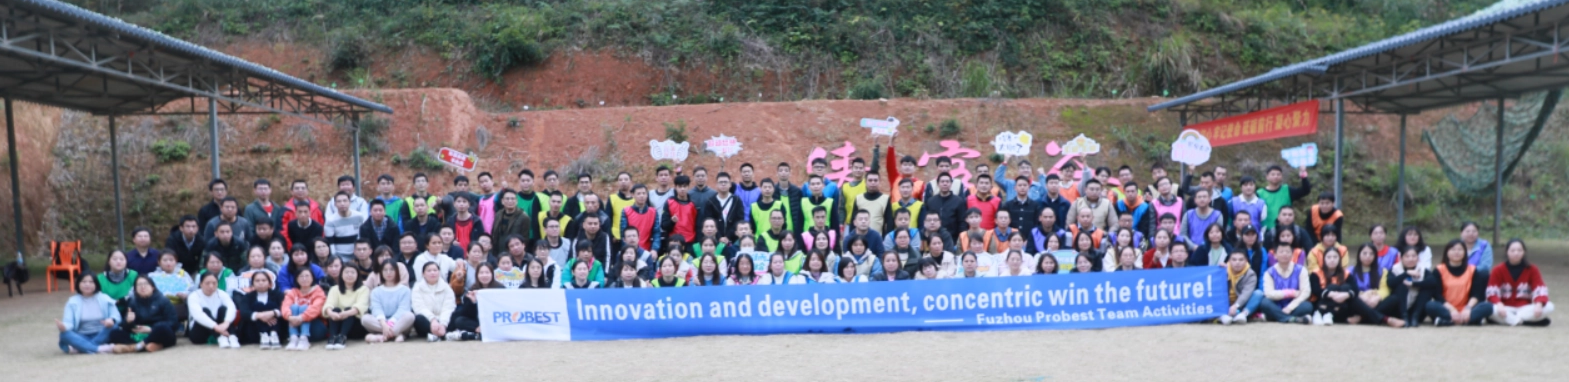 Work Together, Create a Better Future! Fuzhou Probest Team Building Activity